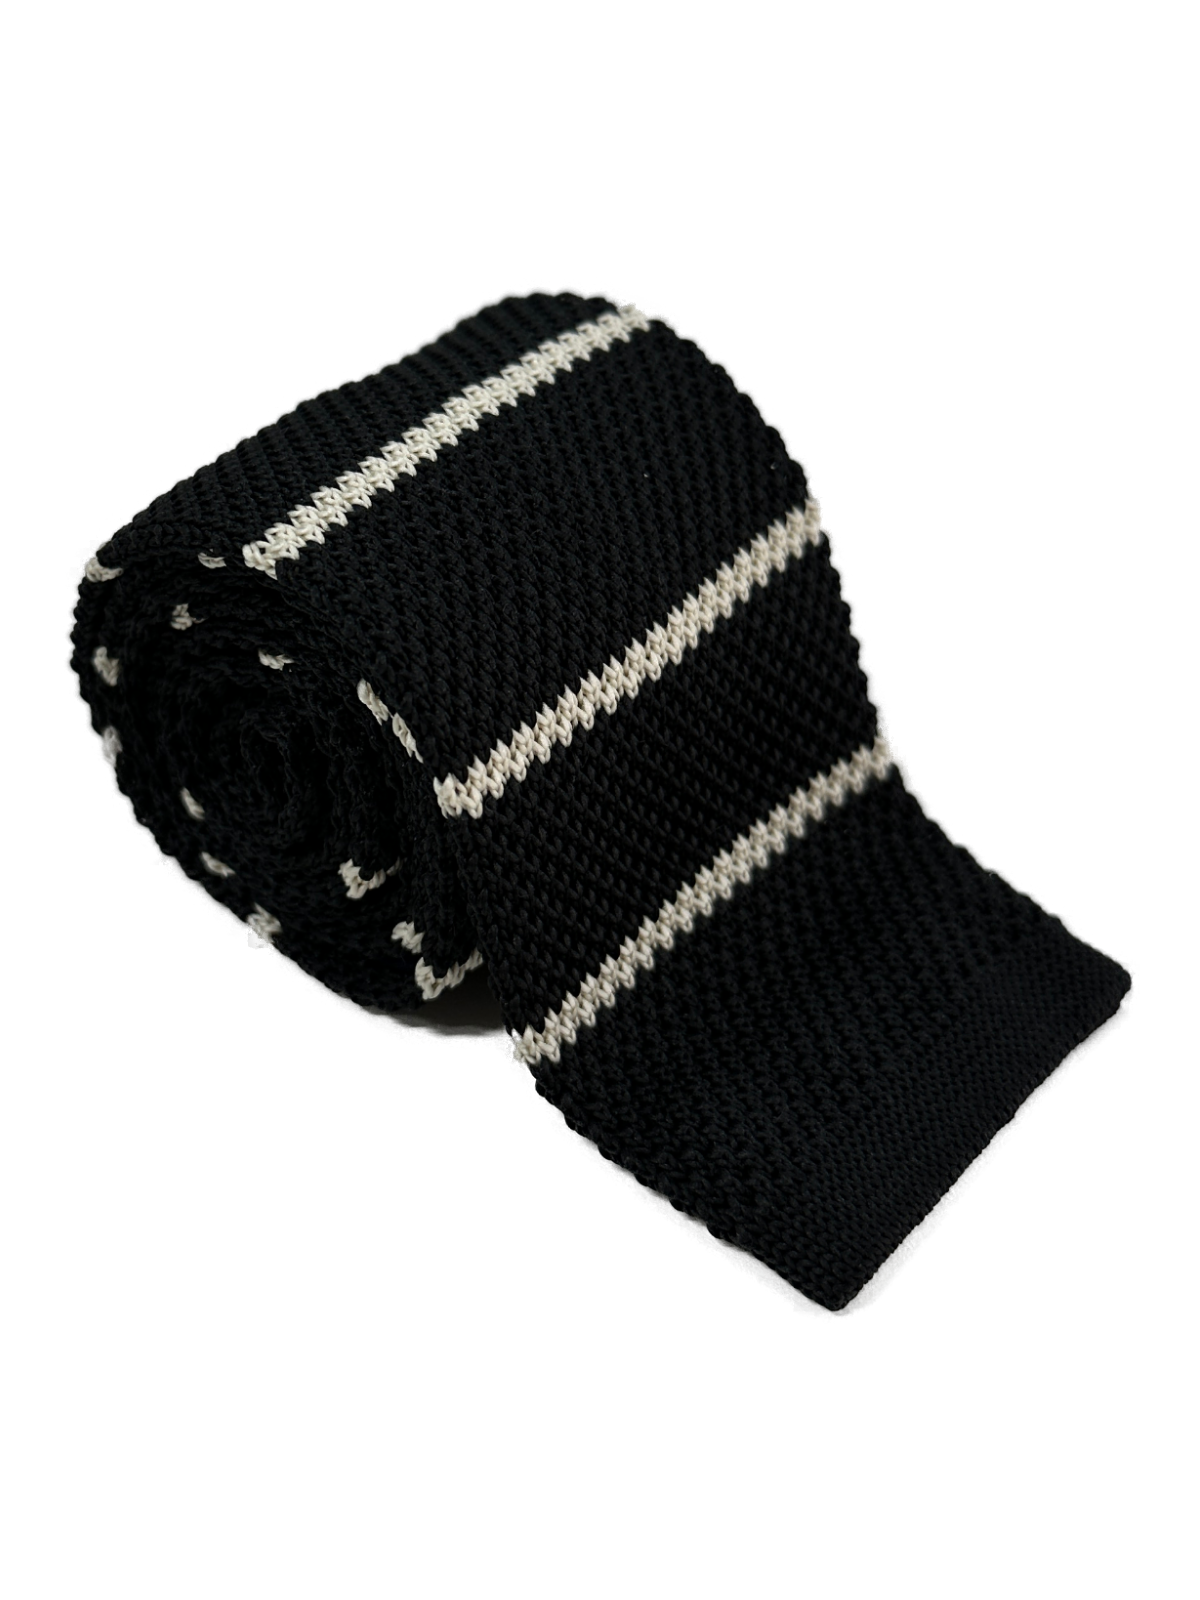 Stripe knitted tie - Black